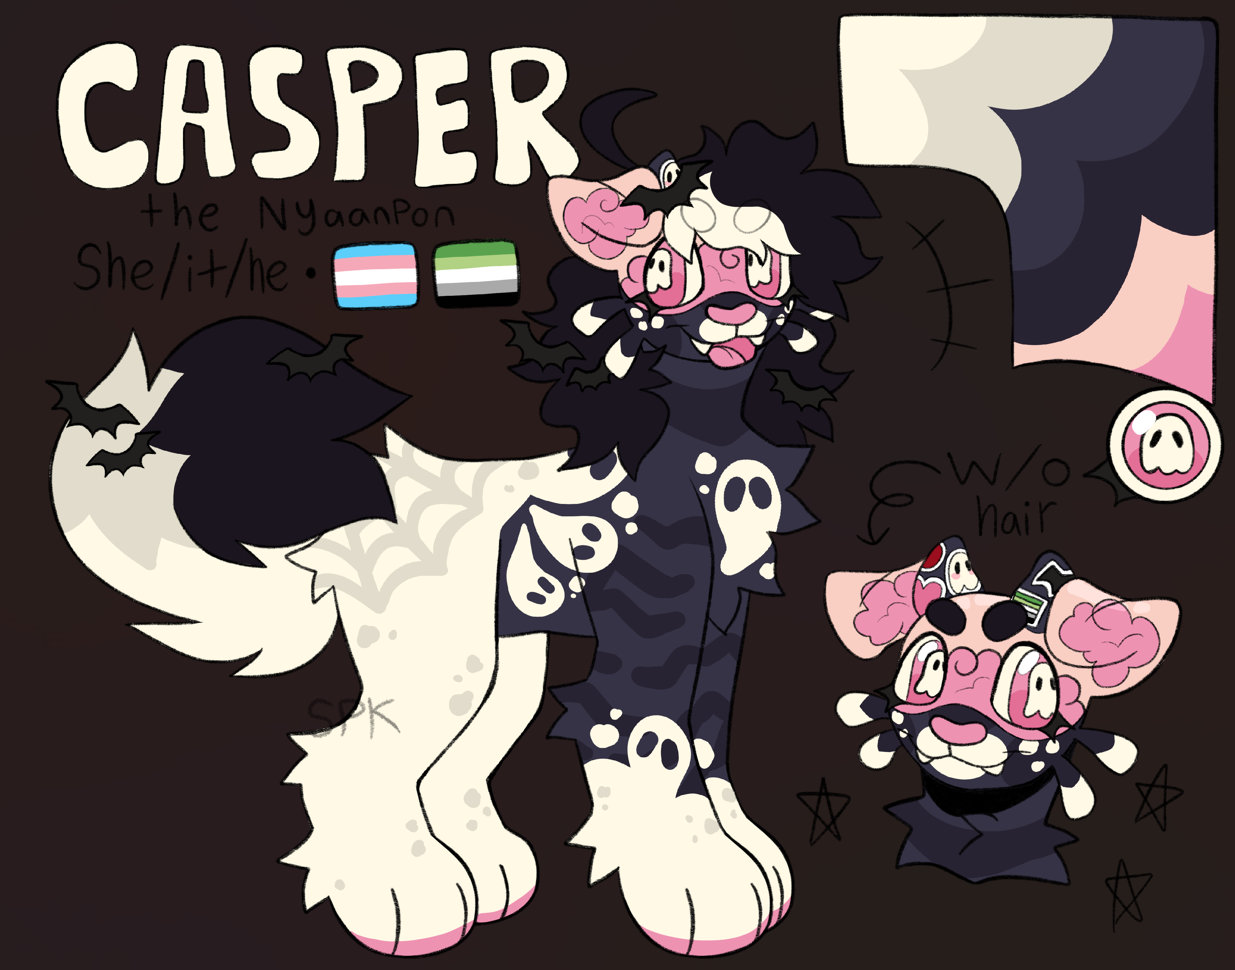 NYA-0197: Casper